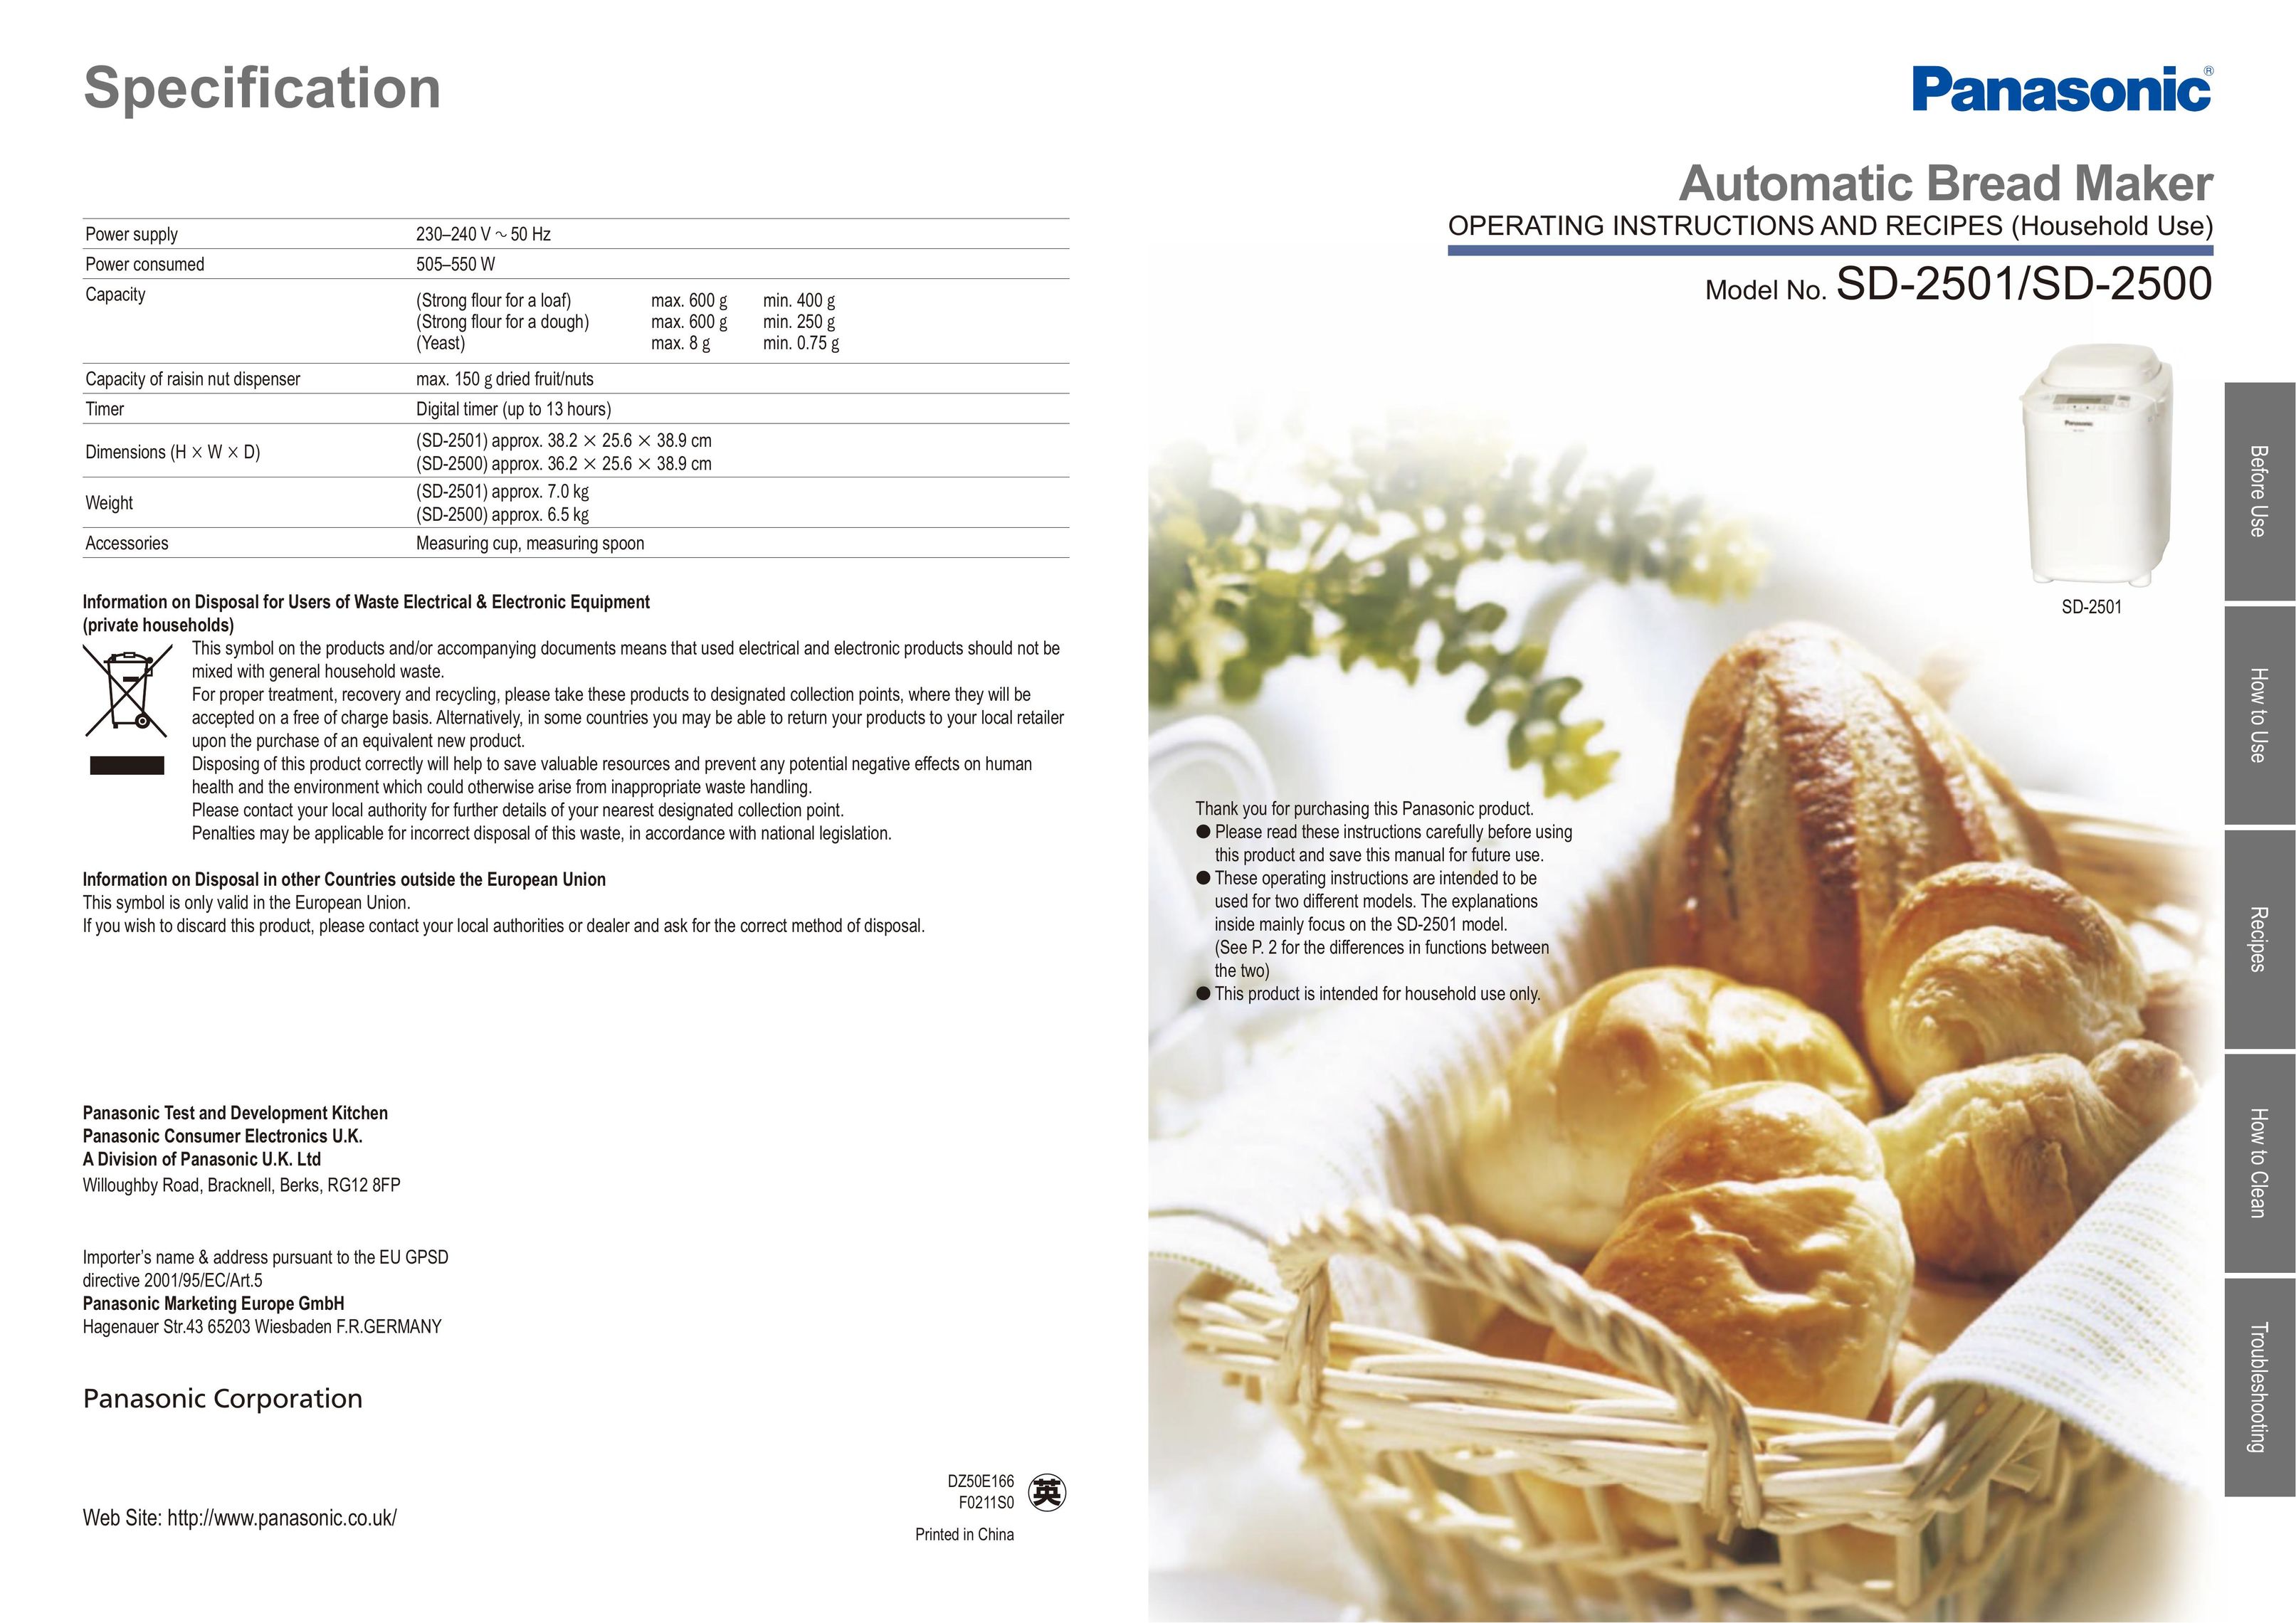 Panasonic SD-2500 Bread Maker User Manual